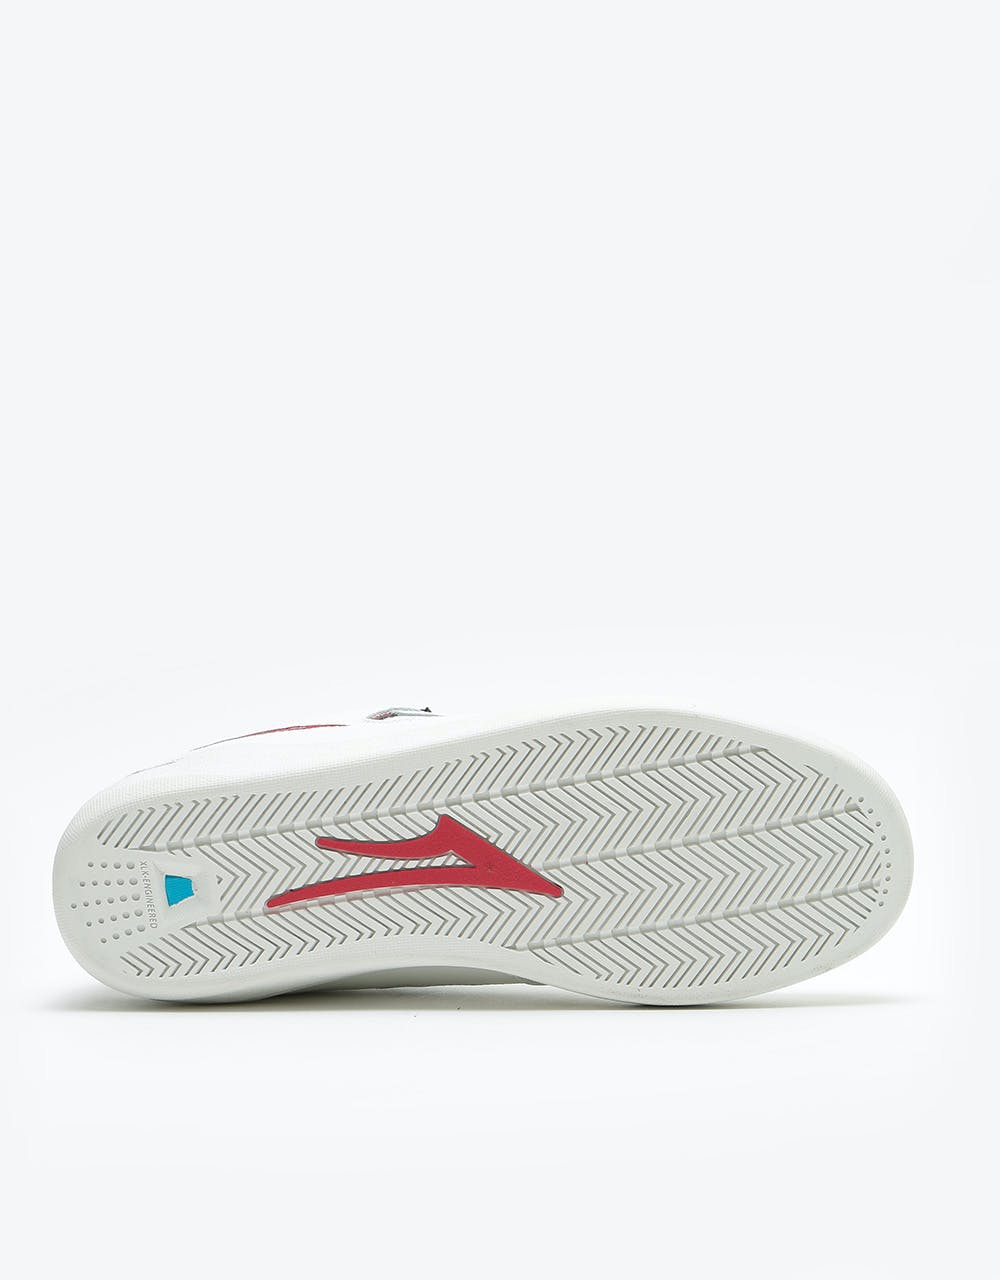 Lakai Carroll Skate Shoes - White Leather